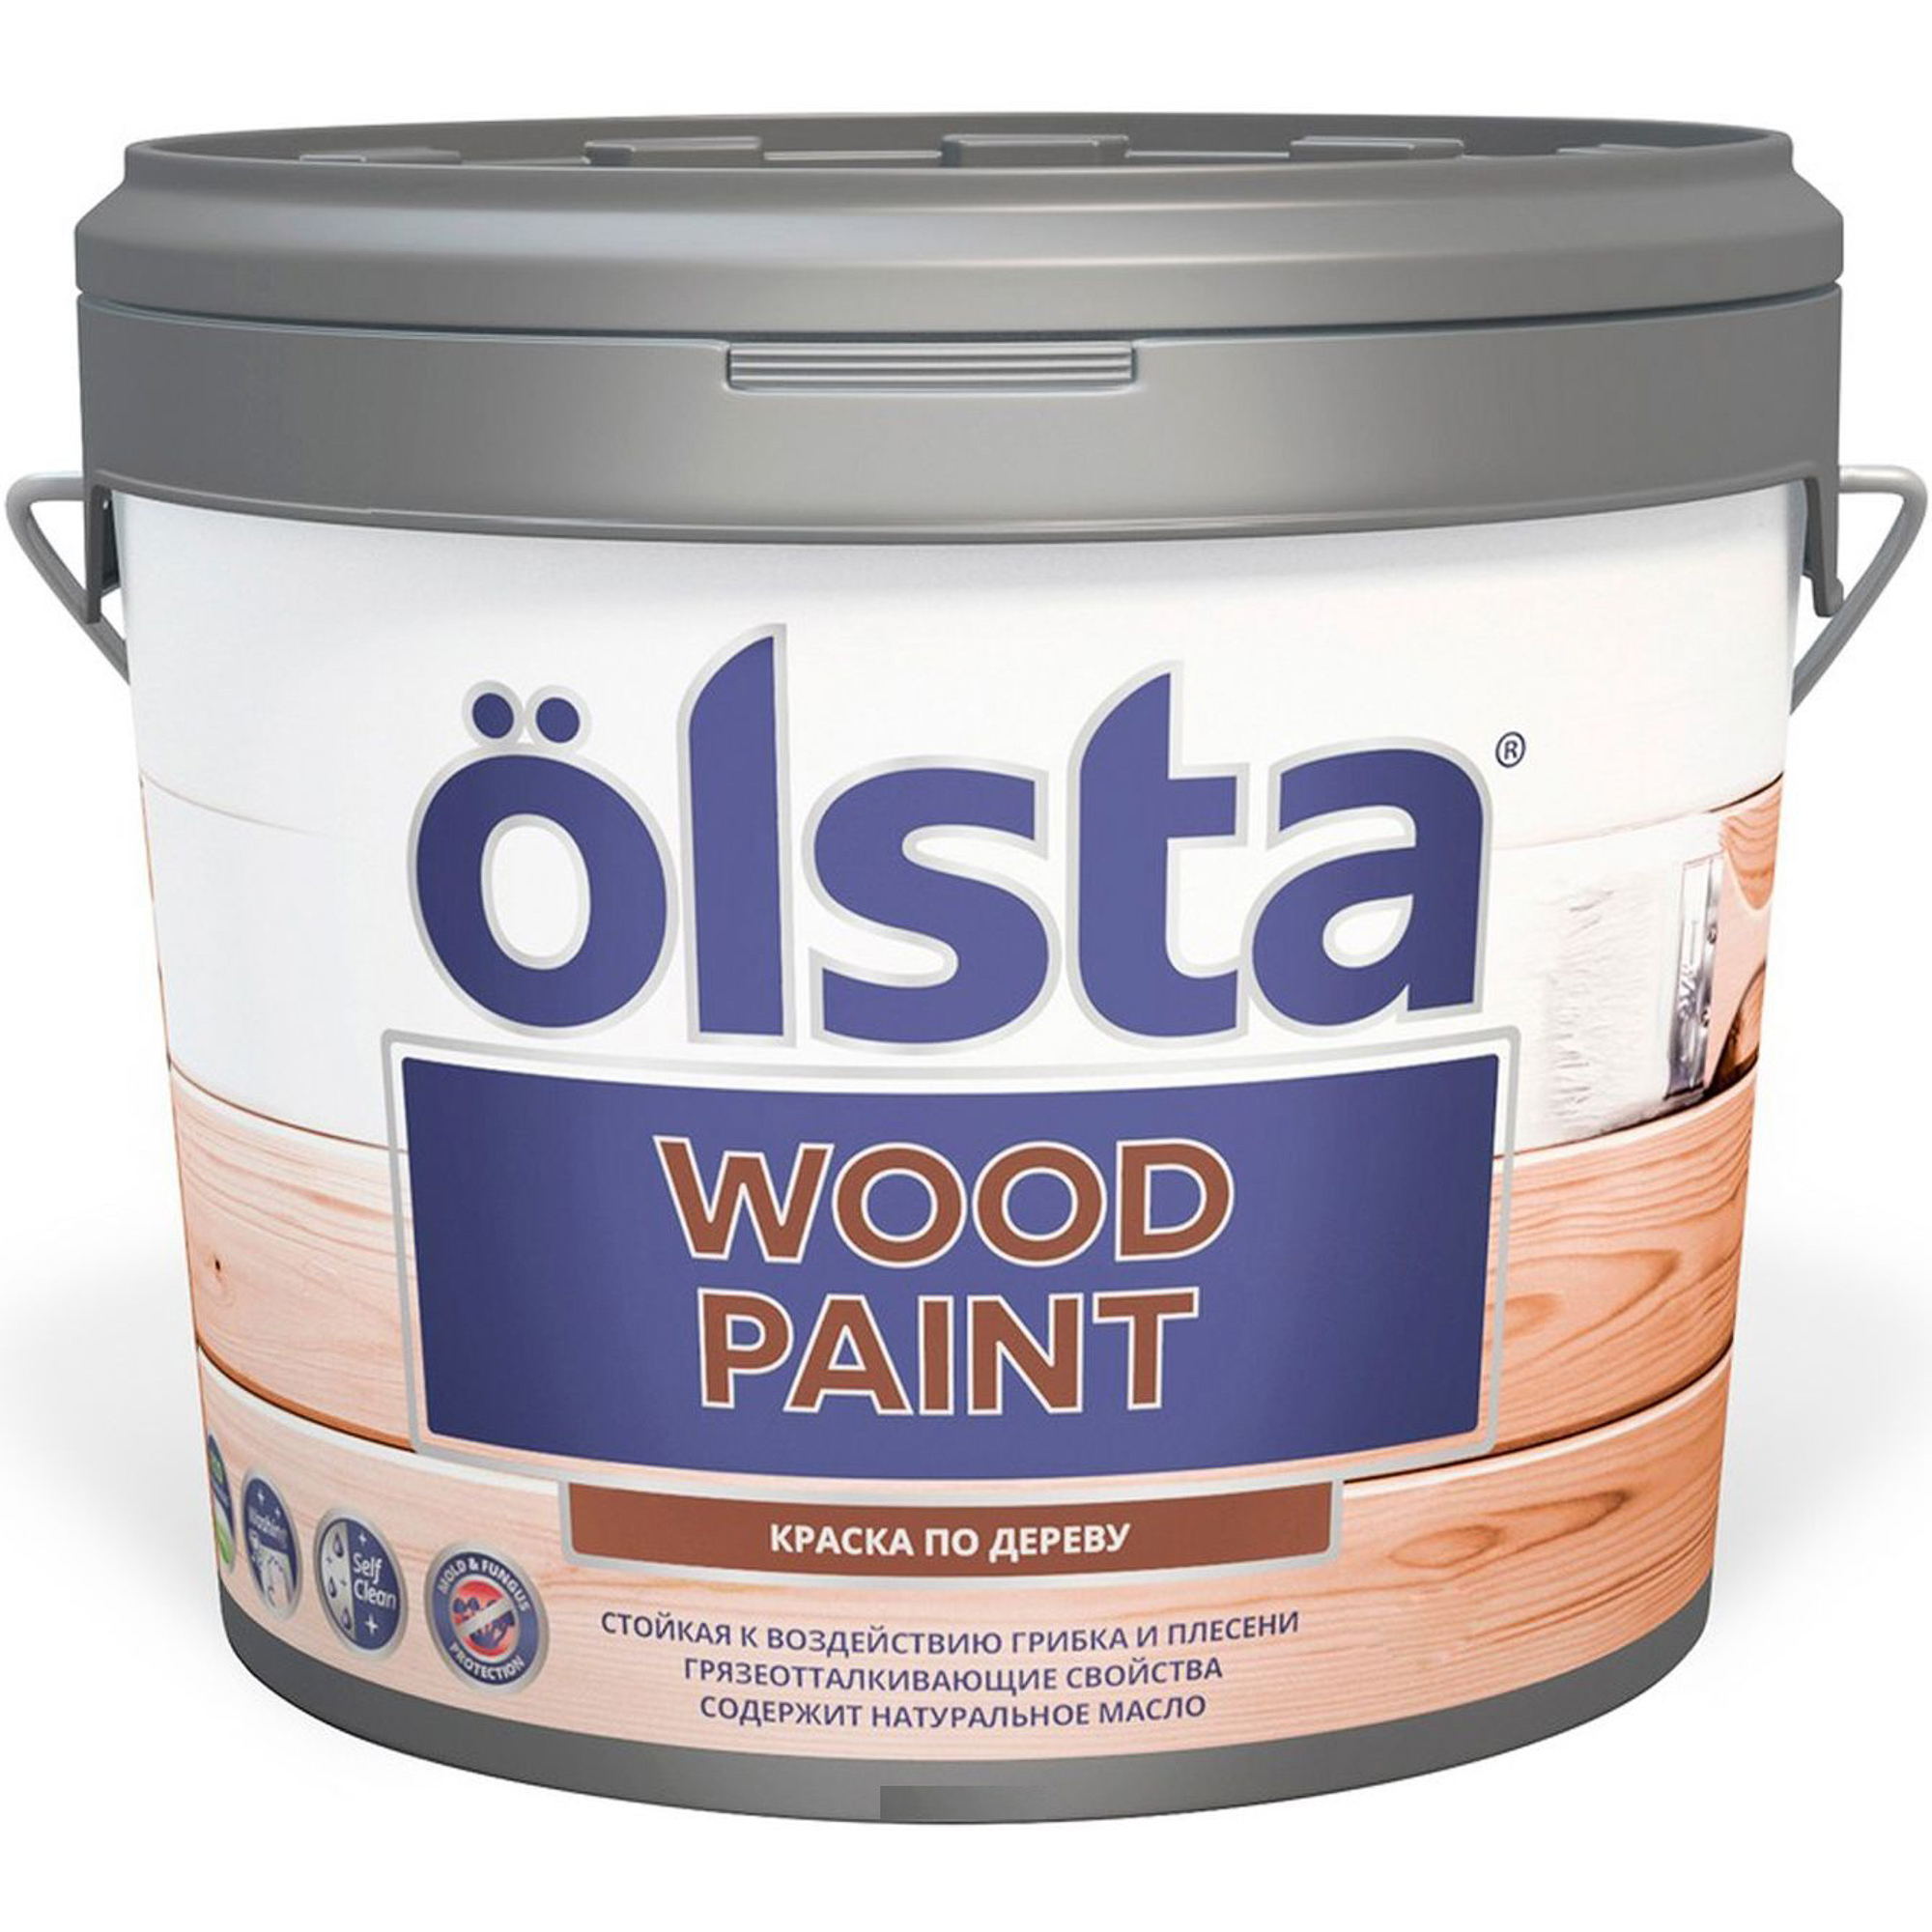 Краска Olsta wood paint для дерева a 2.7 л краска olsta wood paint база с 2 7 л